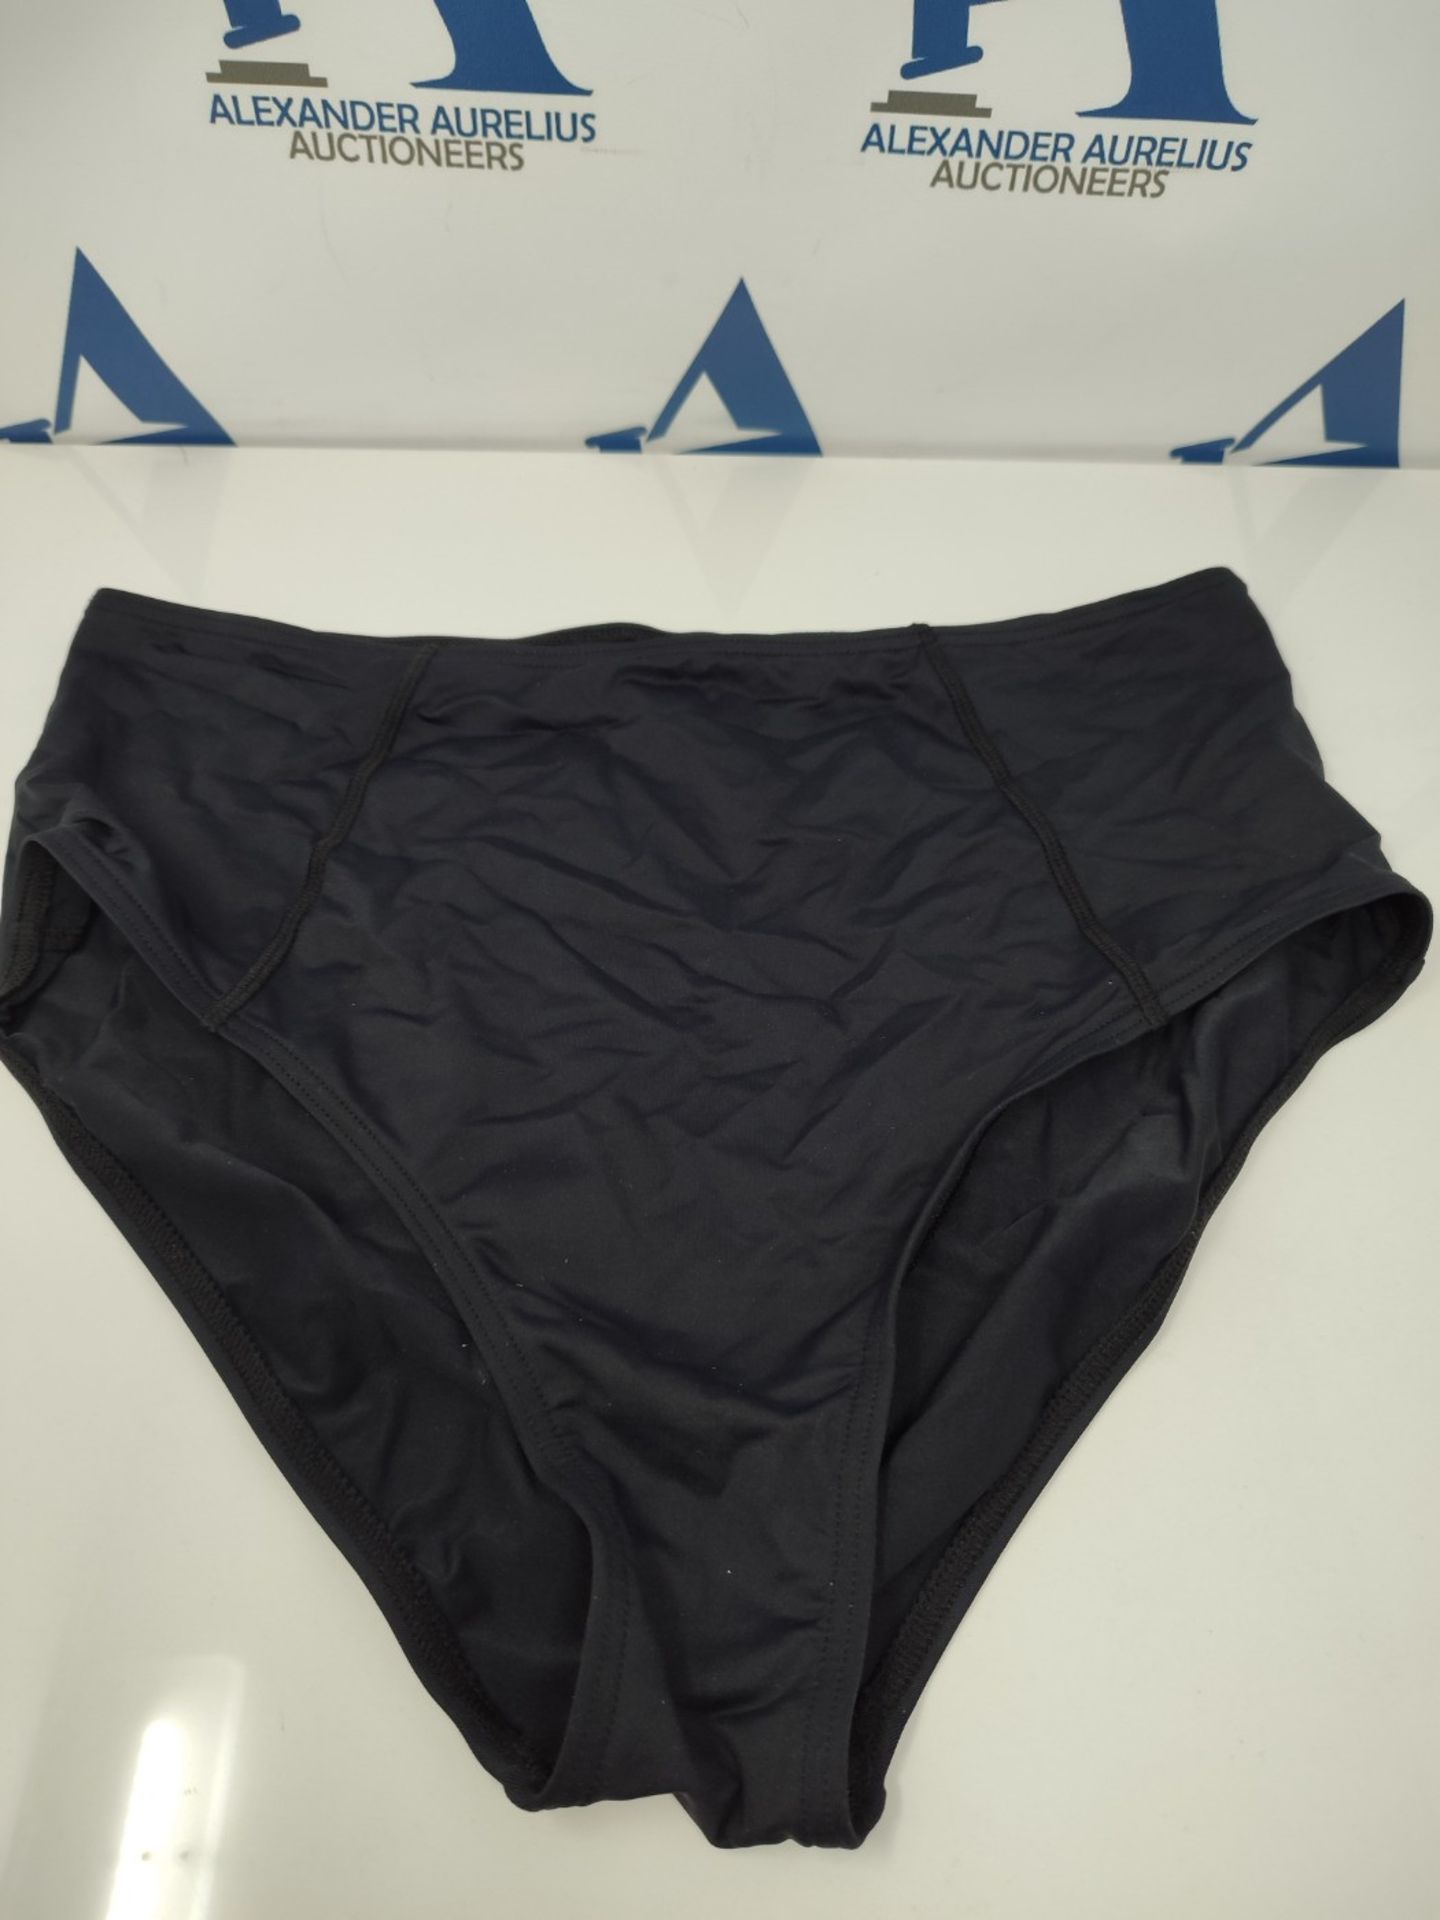 ESPRIT Bodywear Women's TURA Beach AY RCS highw.Brief Bikini Bottoms, Black, 42 - Image 2 of 2